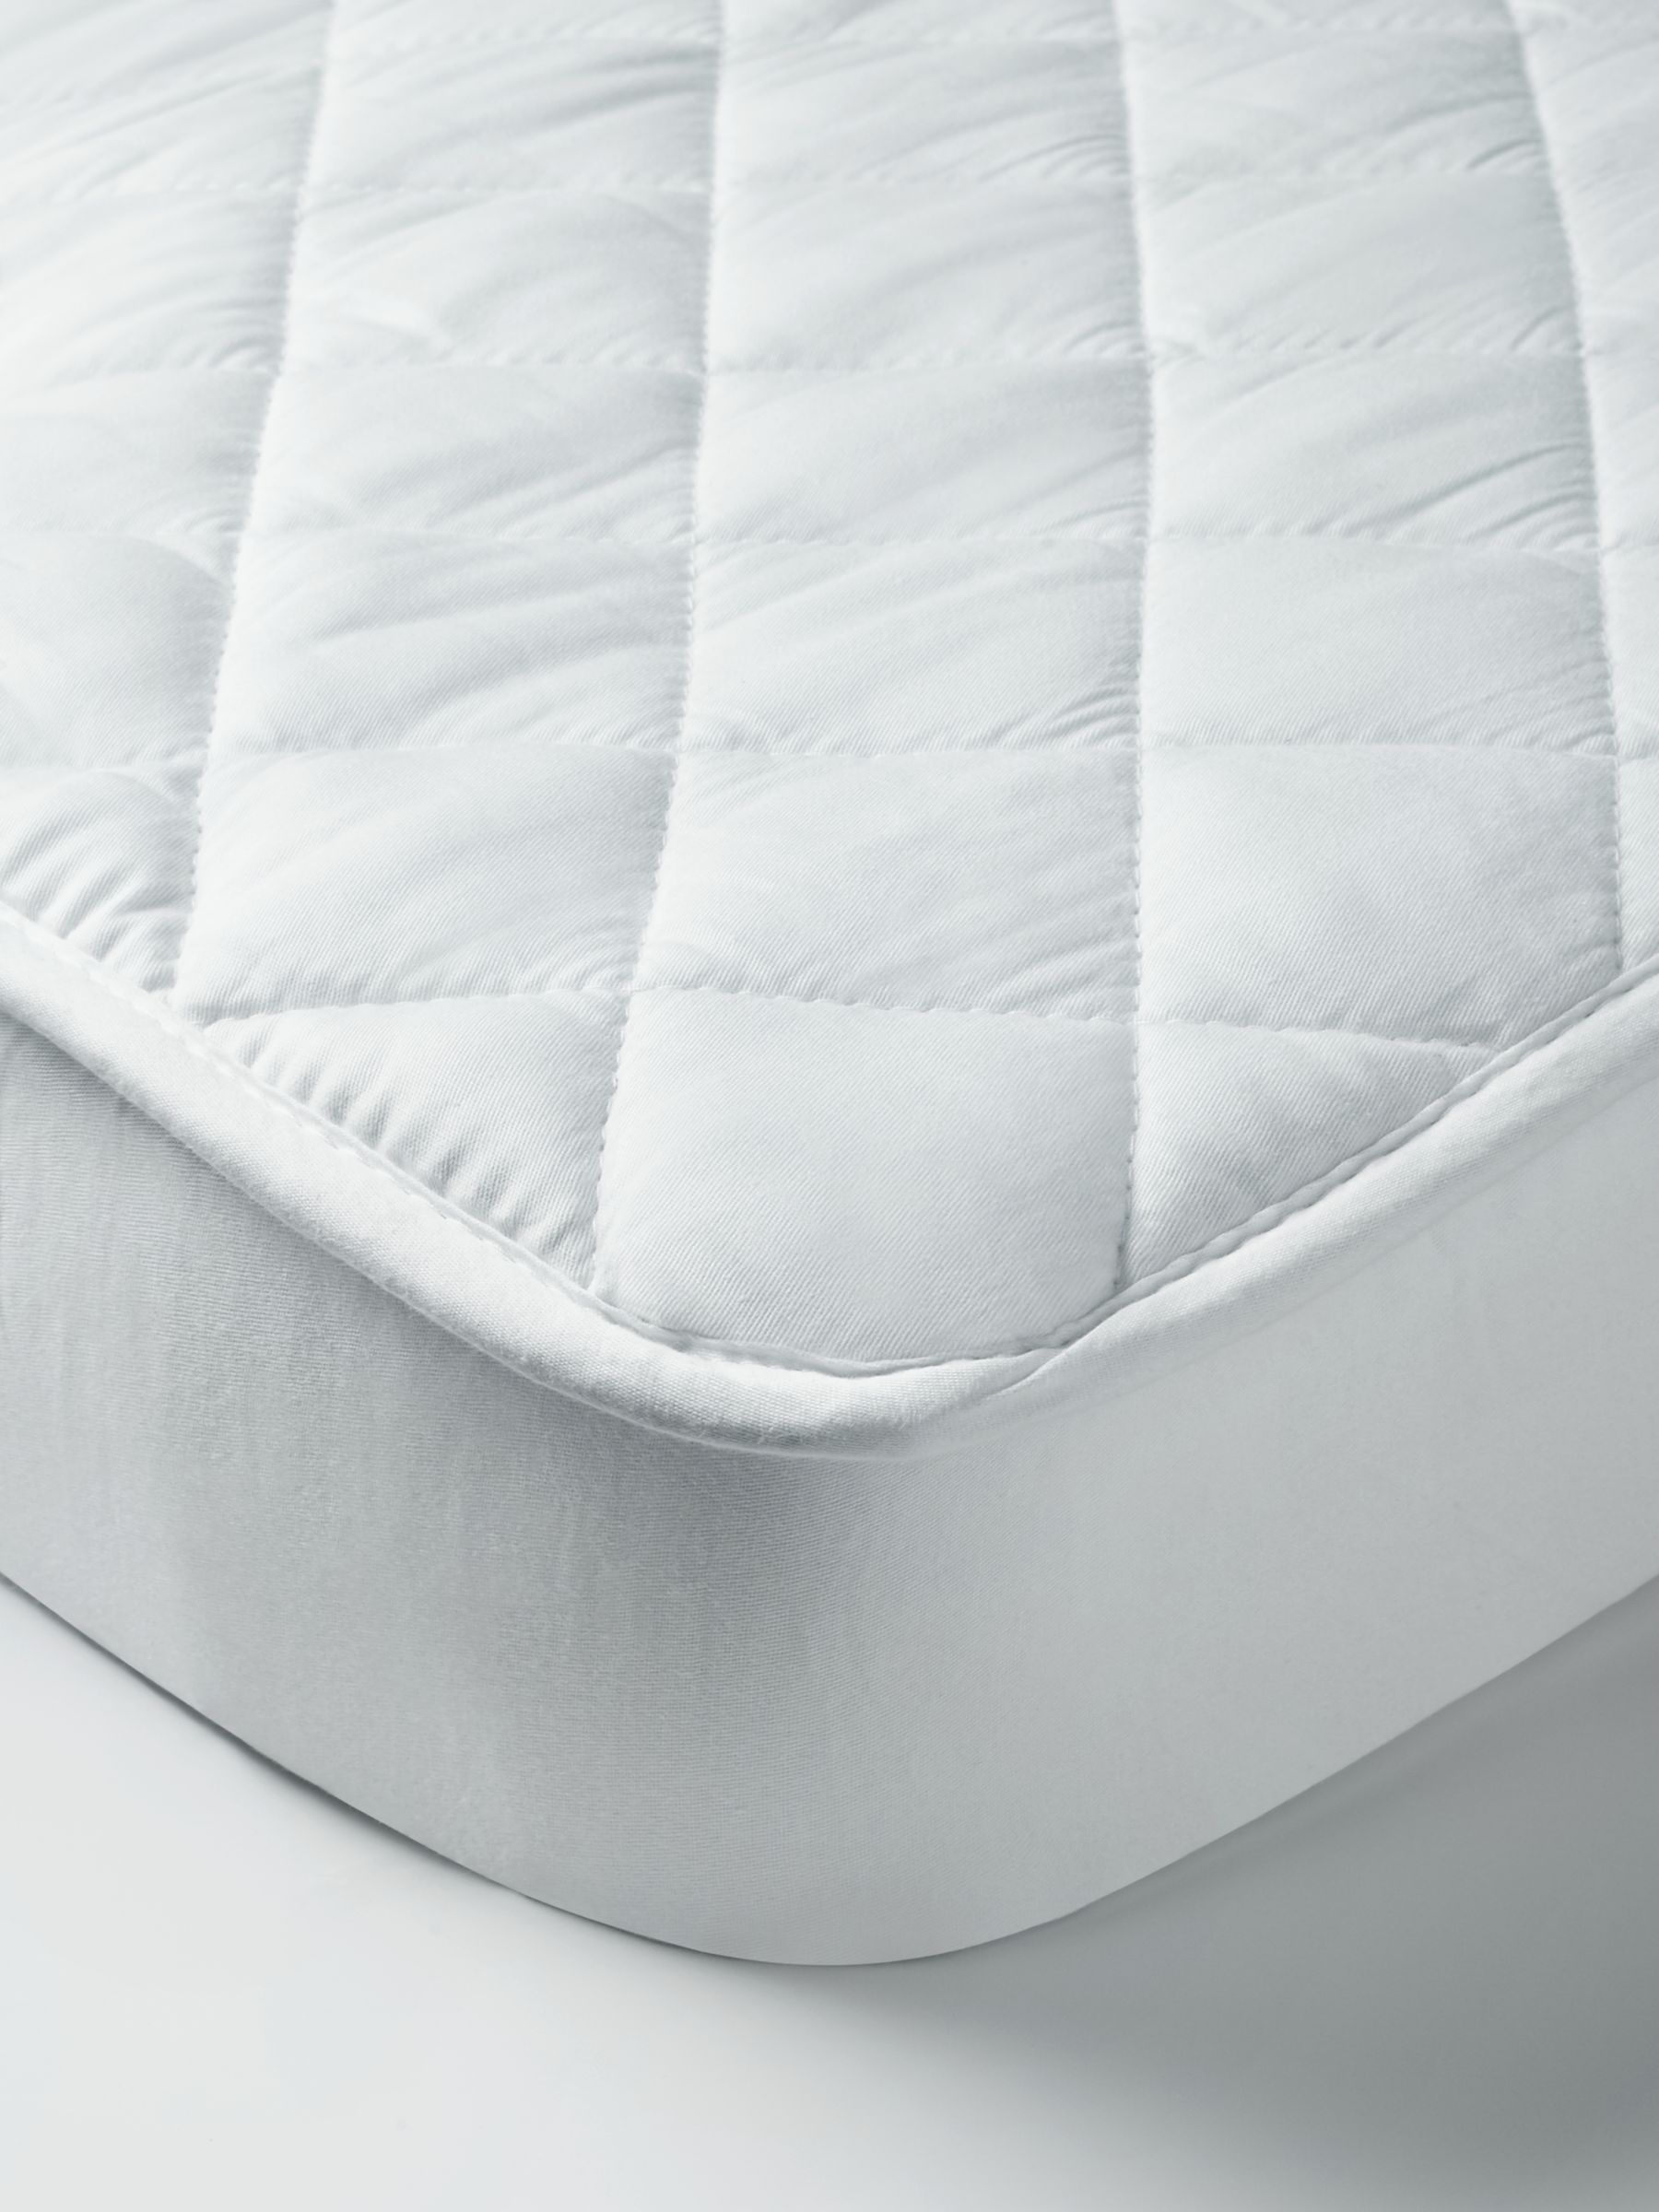 newton mattress waterproof cover